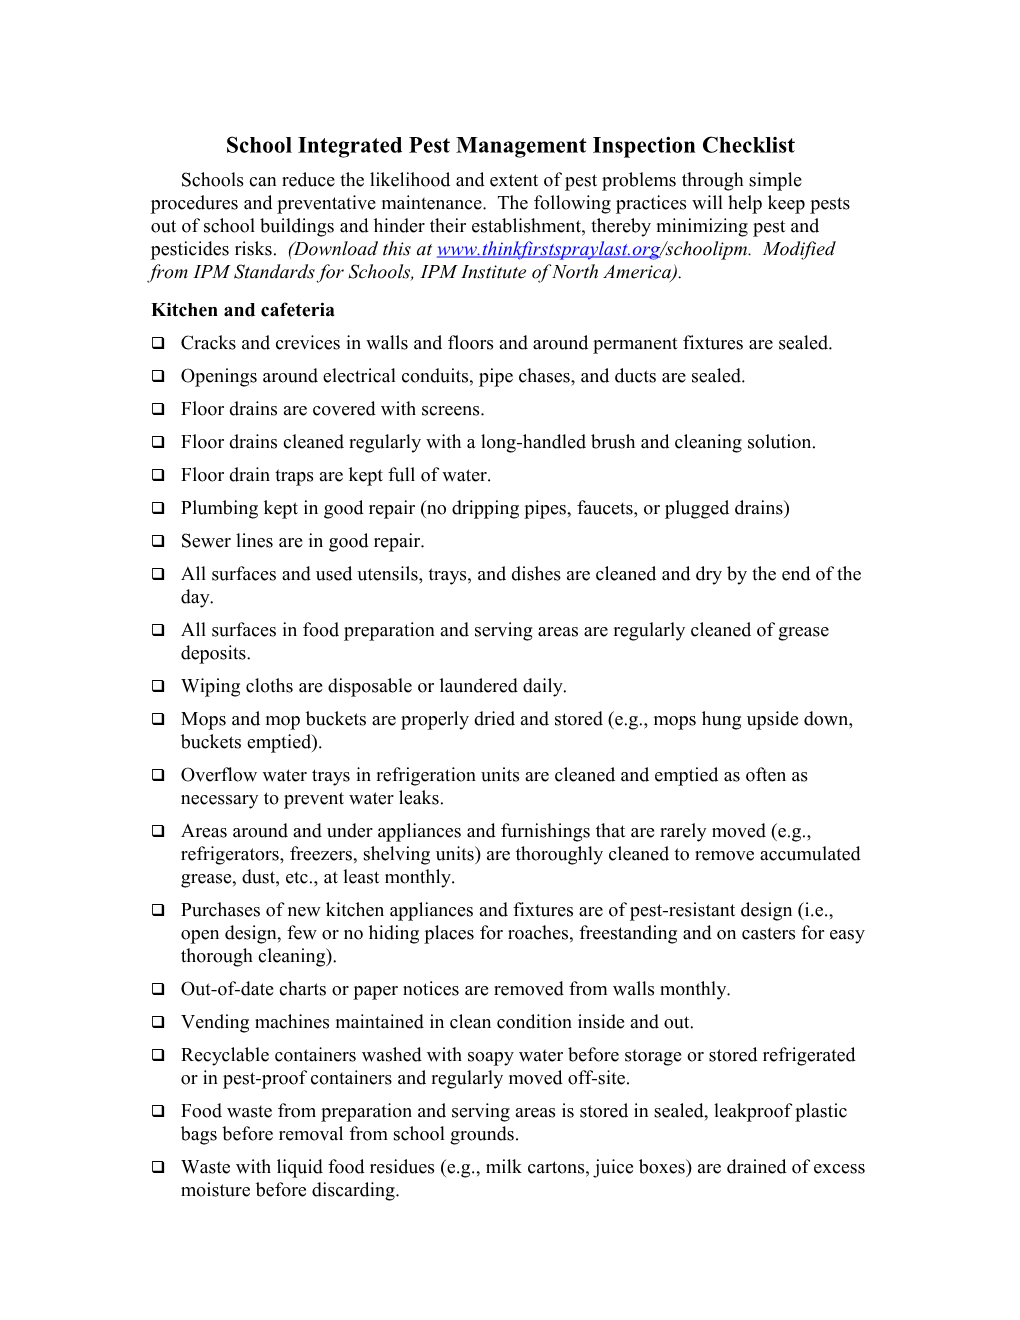 School Integrated Pest Management Inspection Checklist